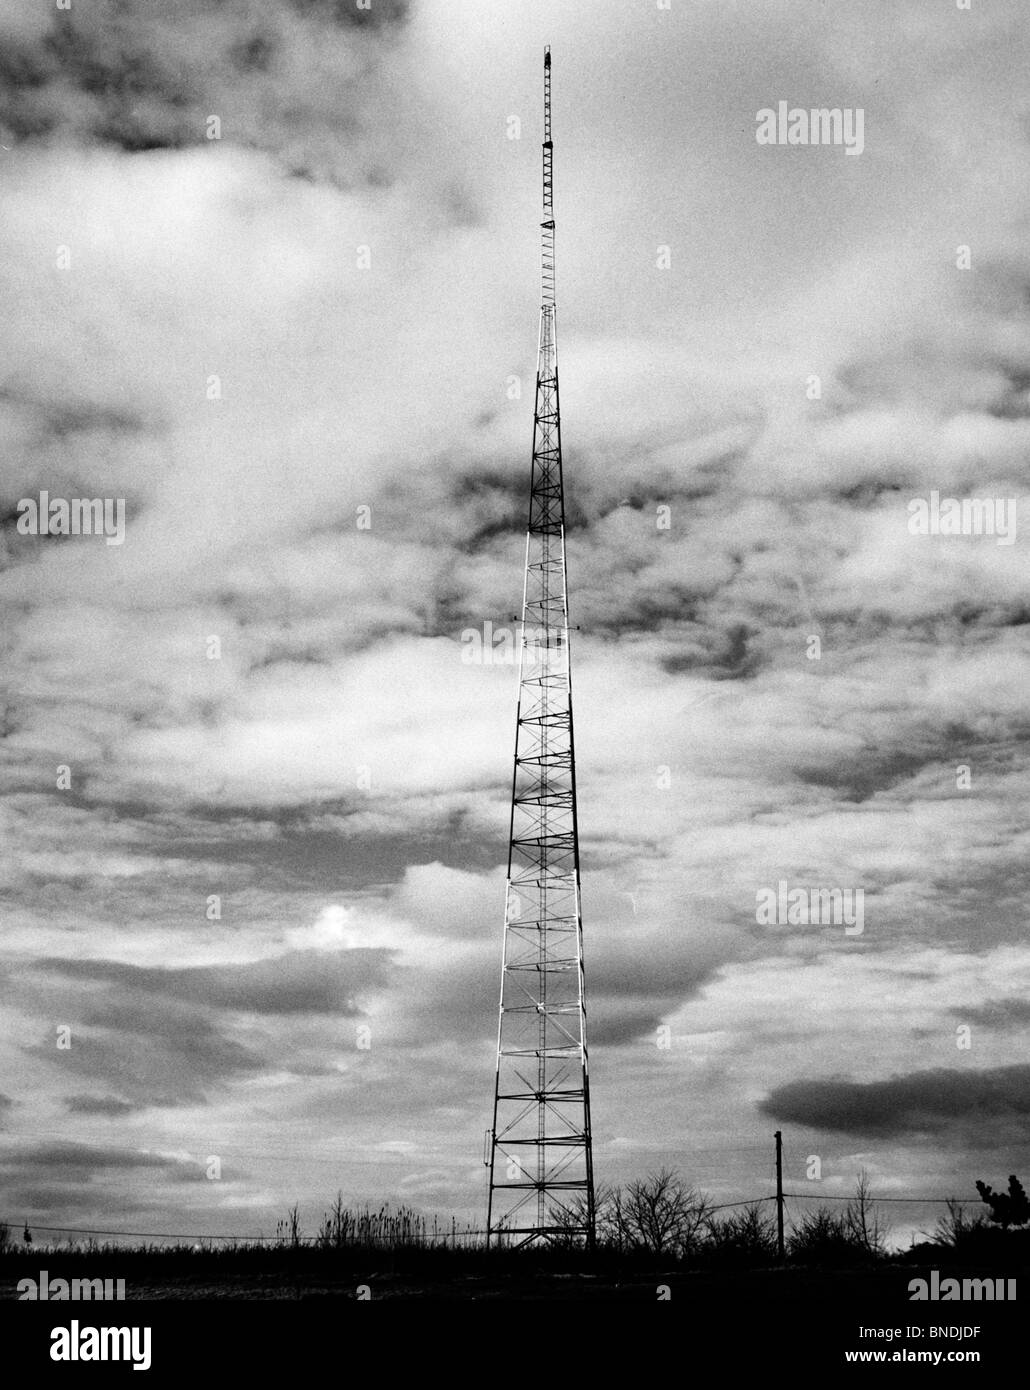 WHLI, Radio Broadcast Tower Stock Photo